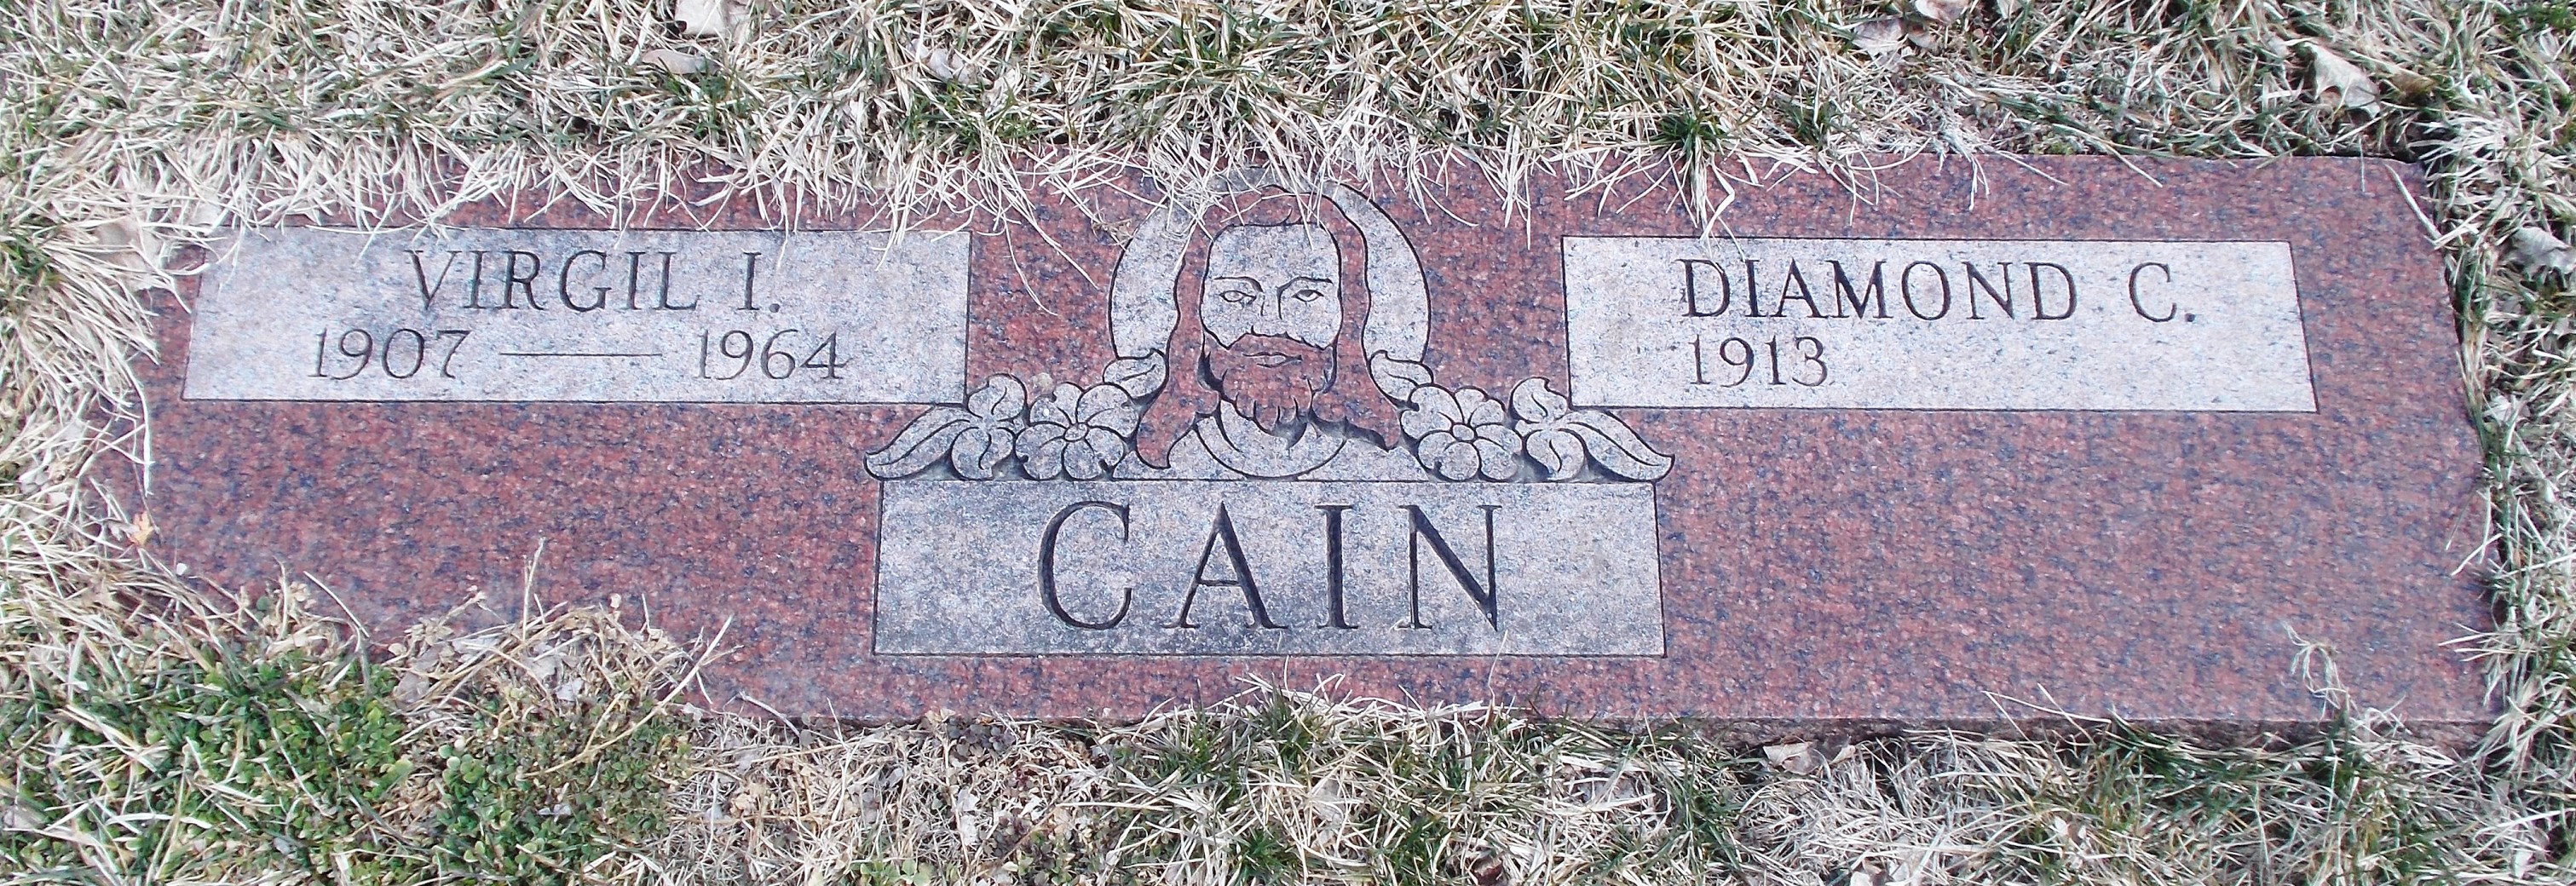 Virgil I Cain